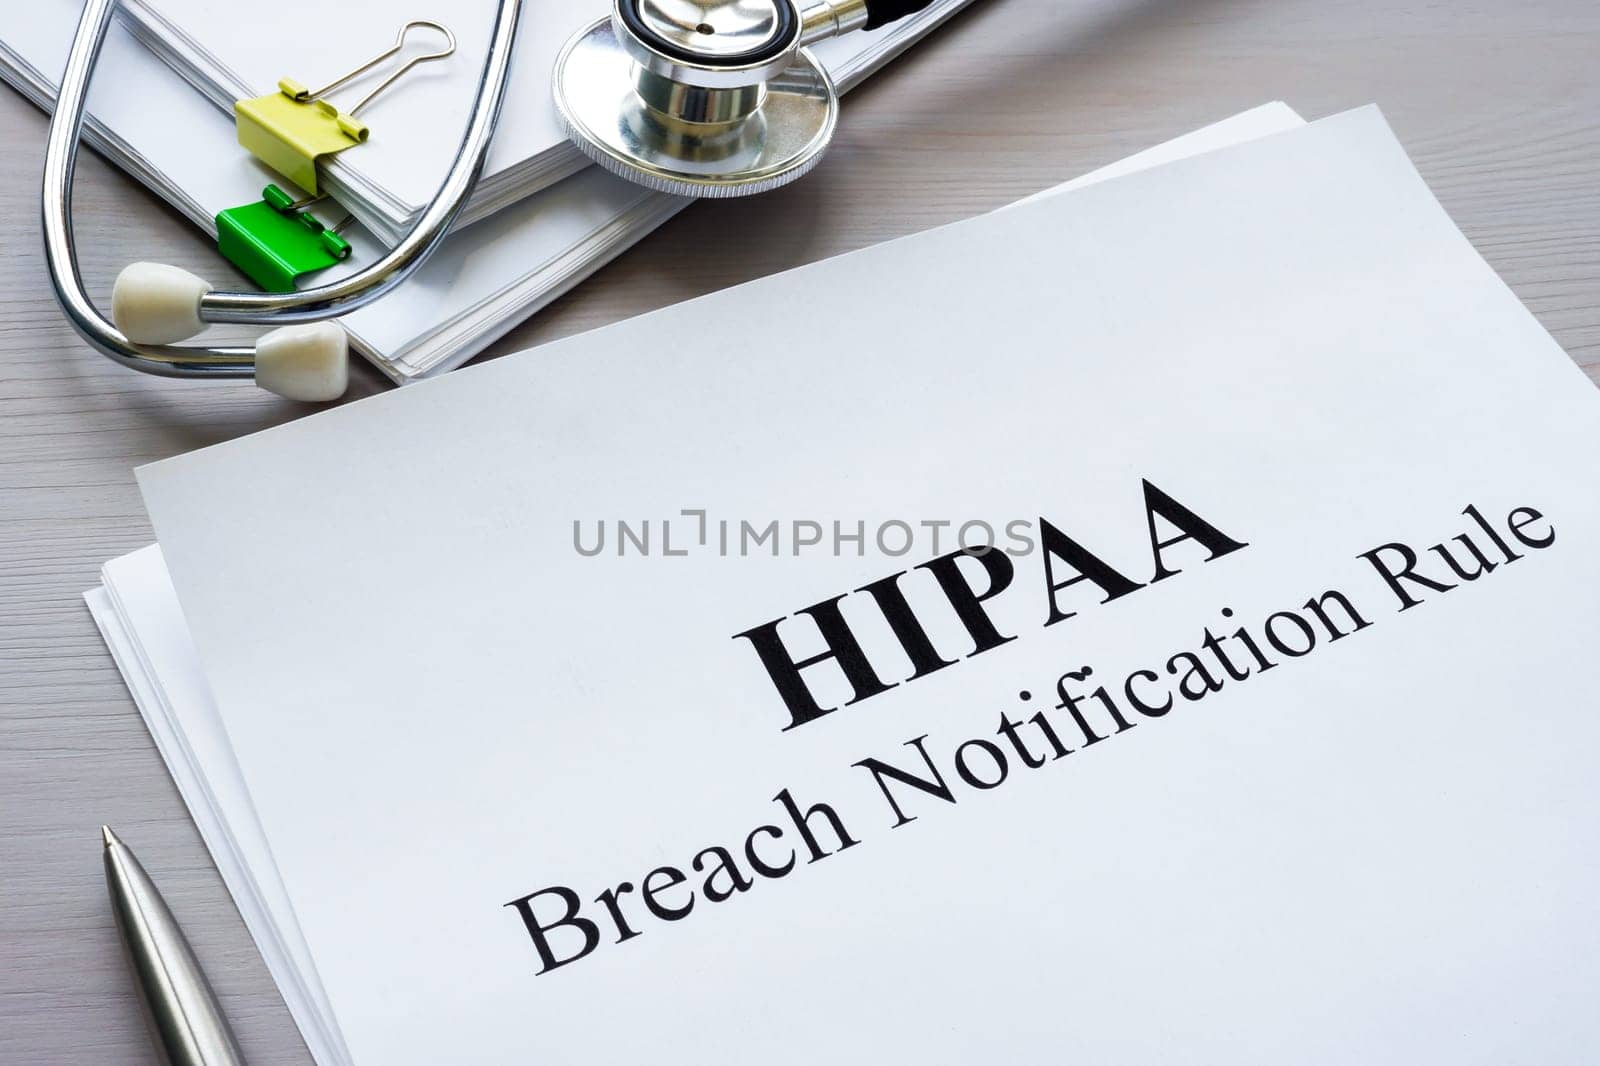 Documents HIPAA breach notification rule on table.